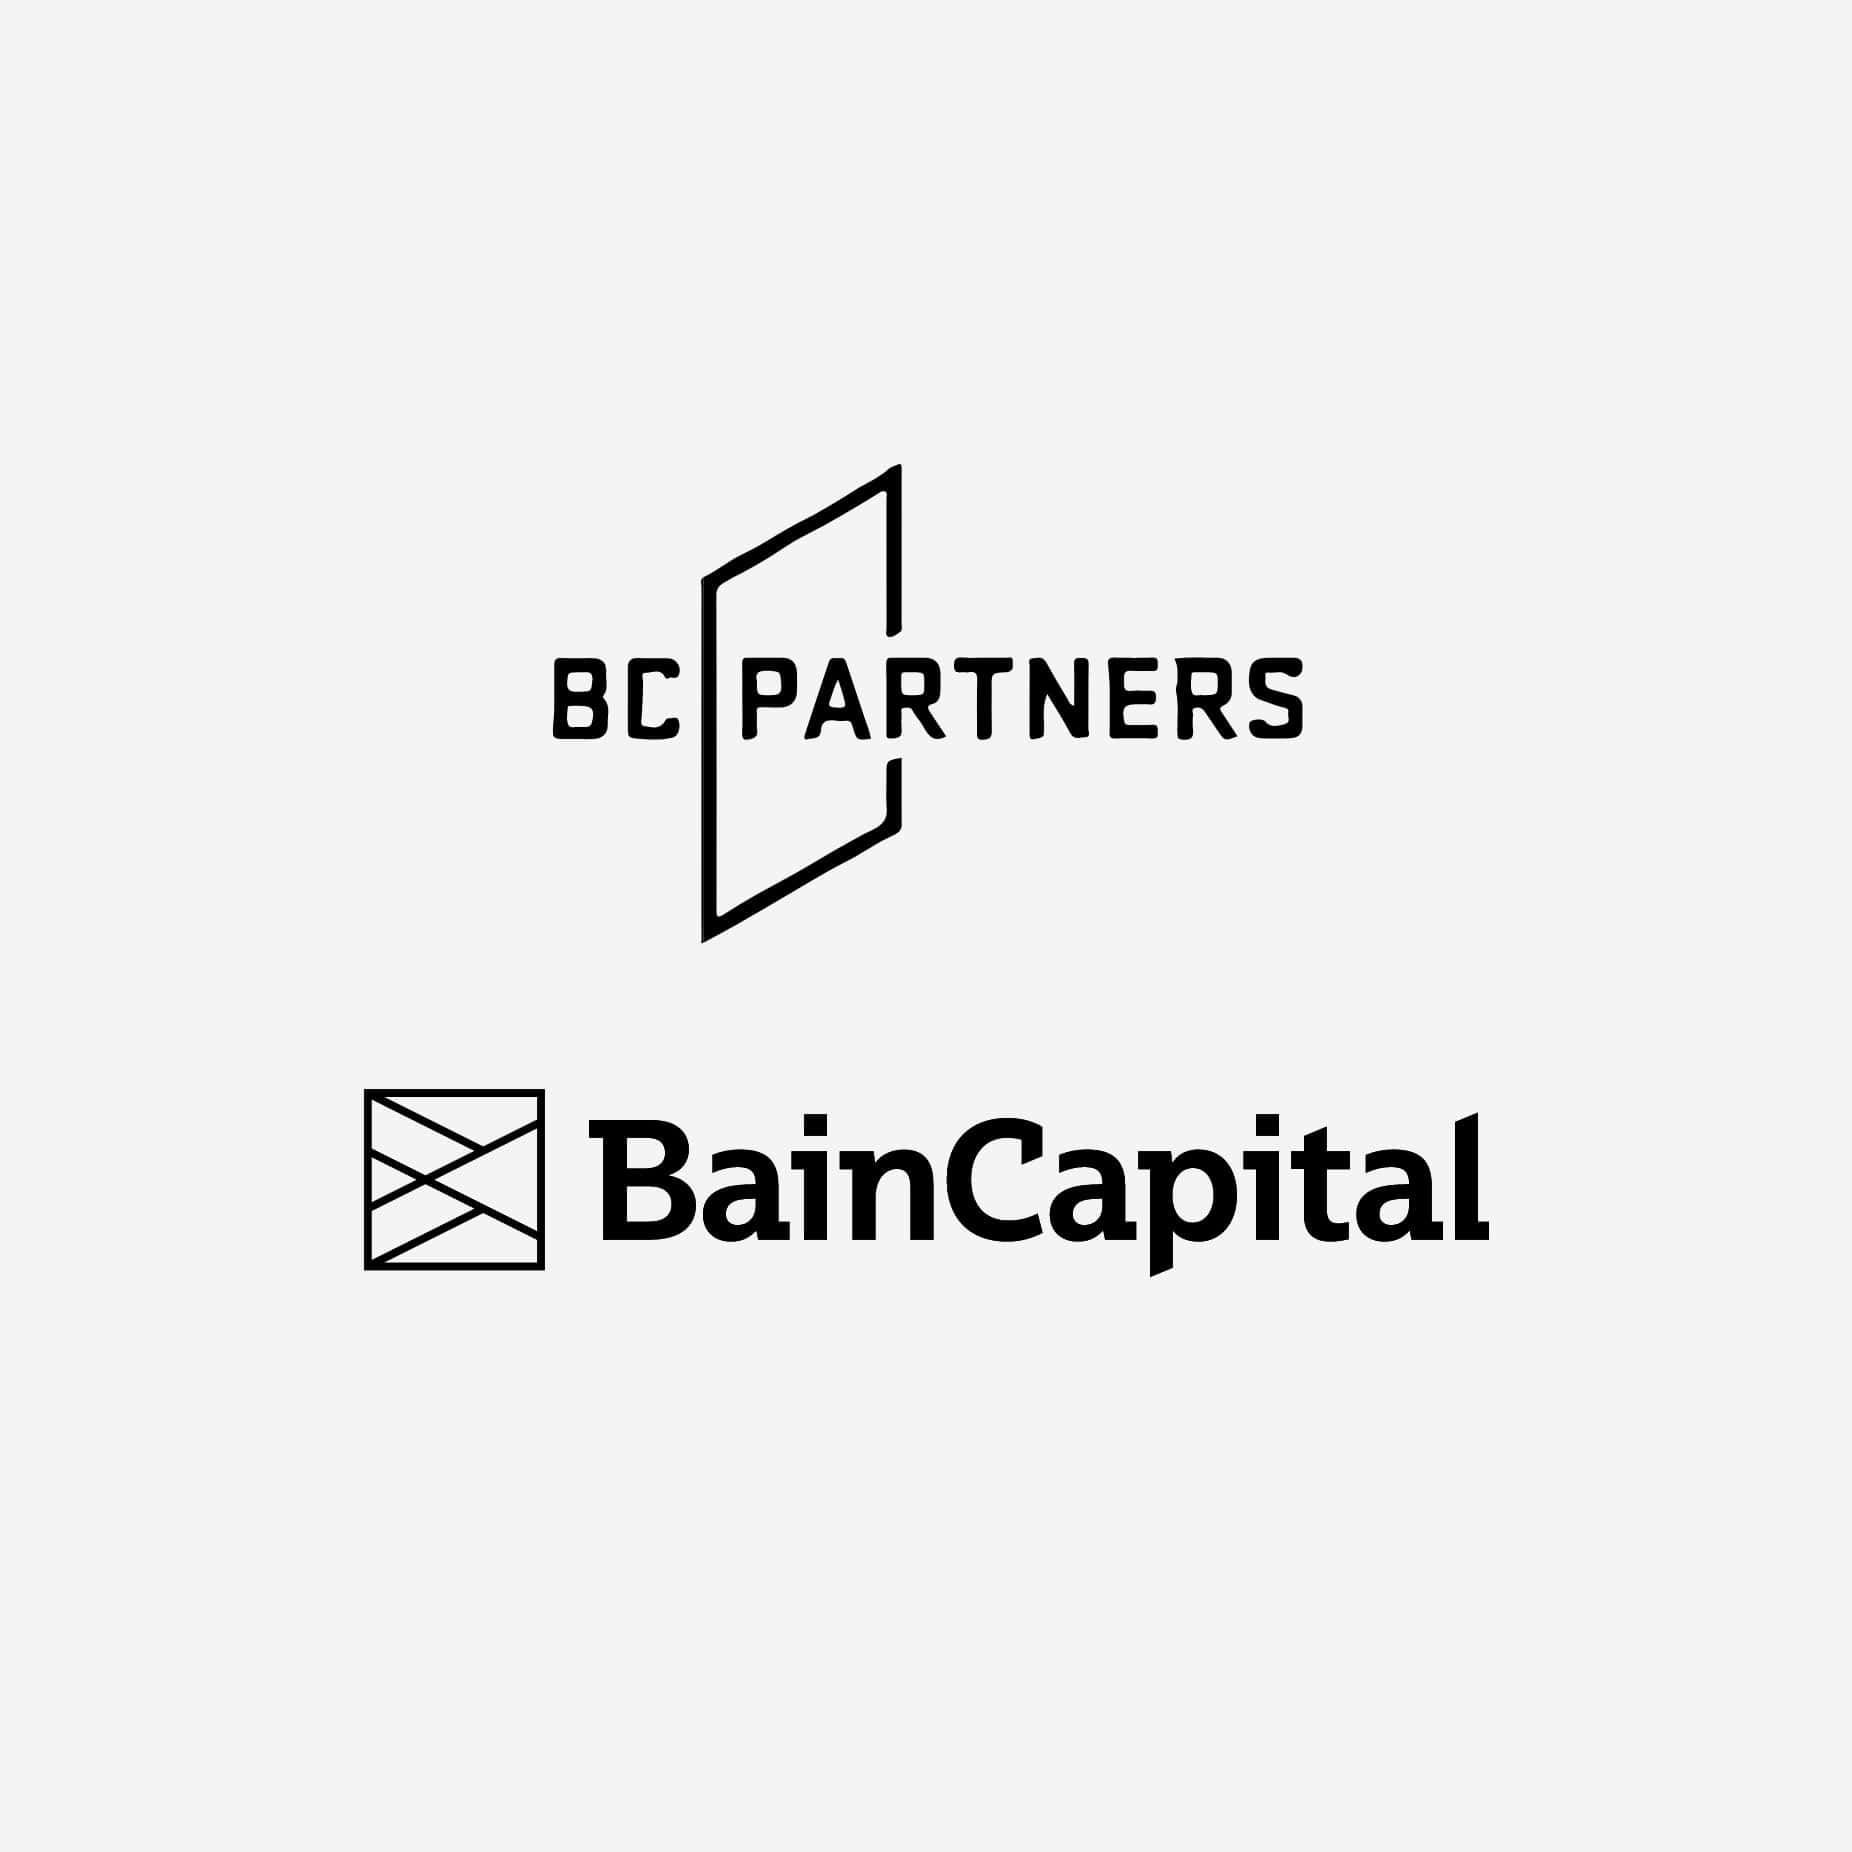 BC Partners, Bain Capital